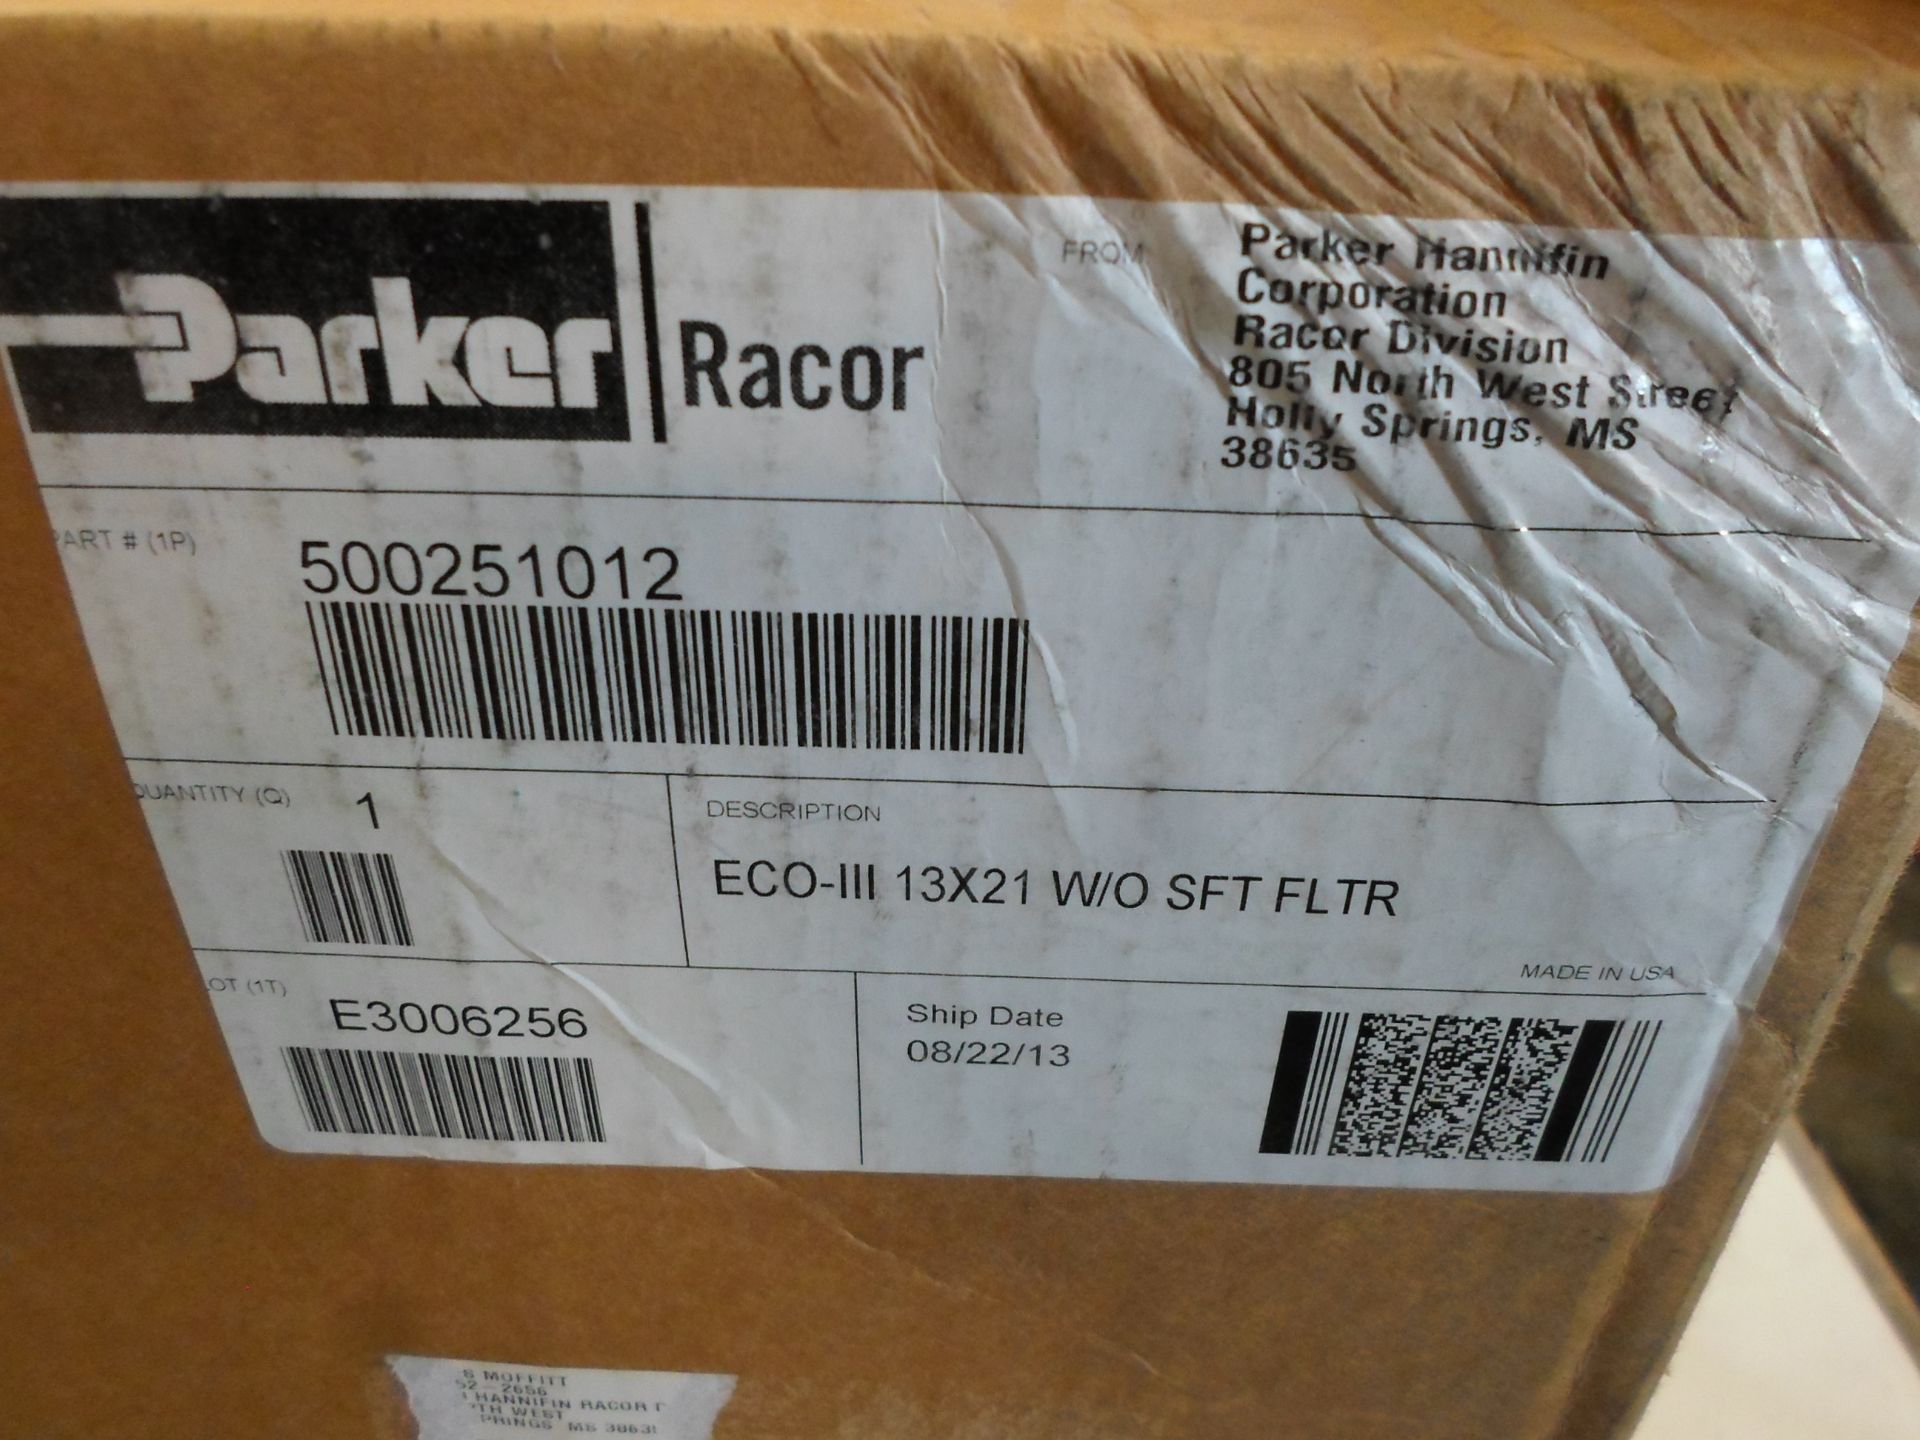 BRAND NEW RACOR PARKER ECO 111 13X21 500247-012 W/SFT FLETR - Image 3 of 3